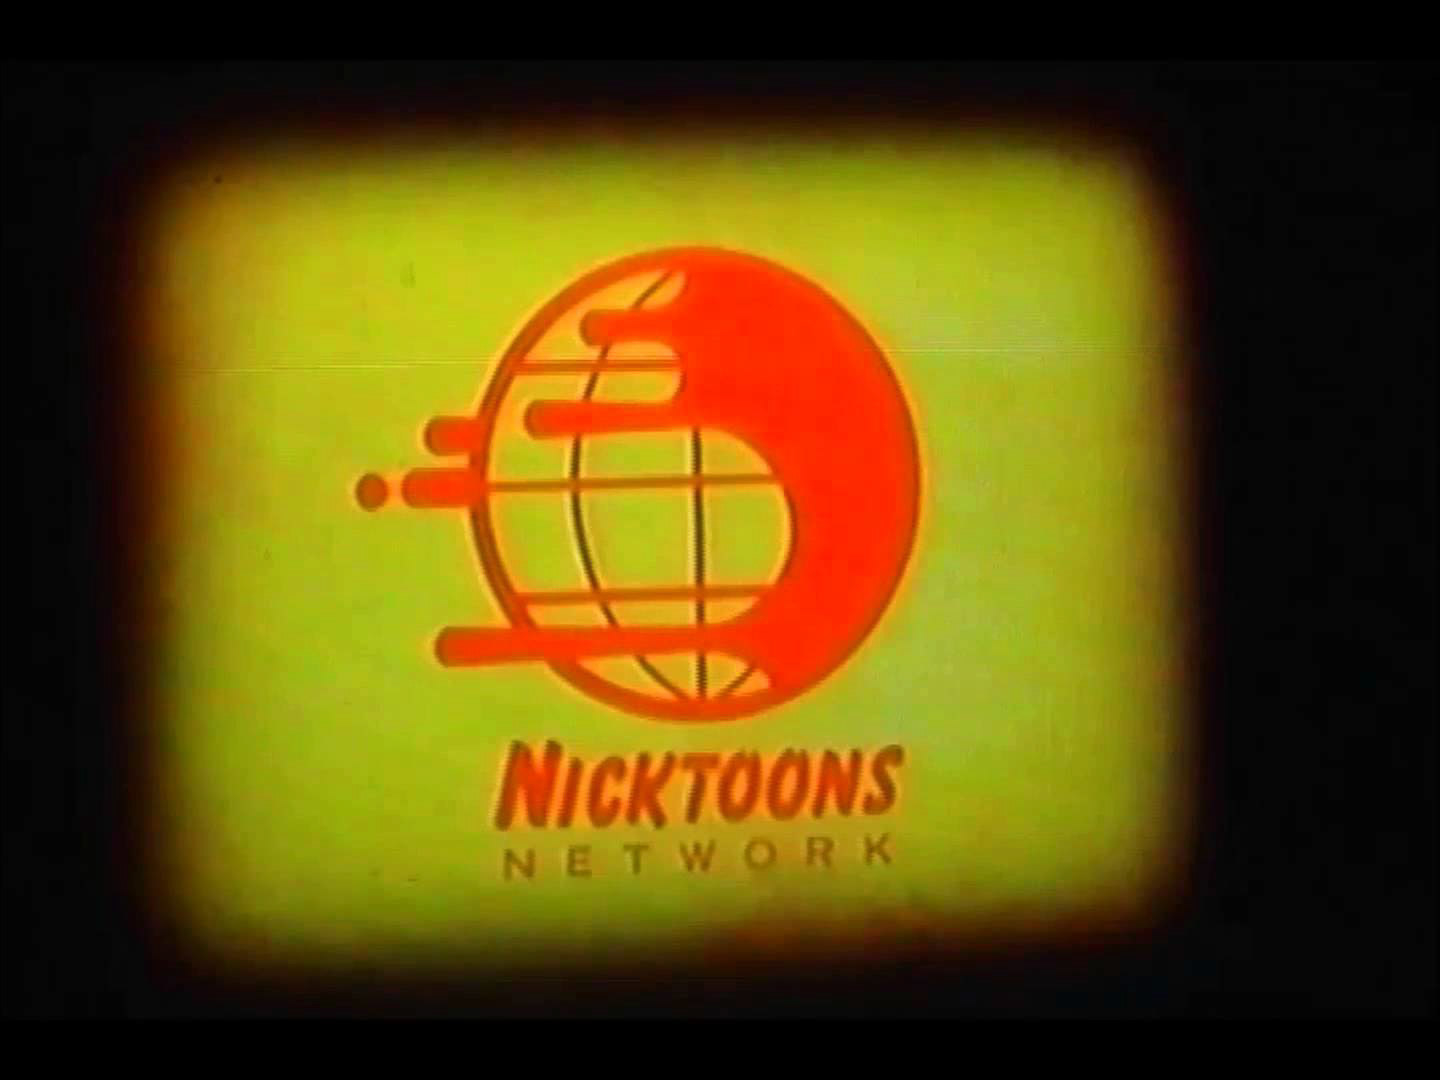 Nicktoons Network logo.